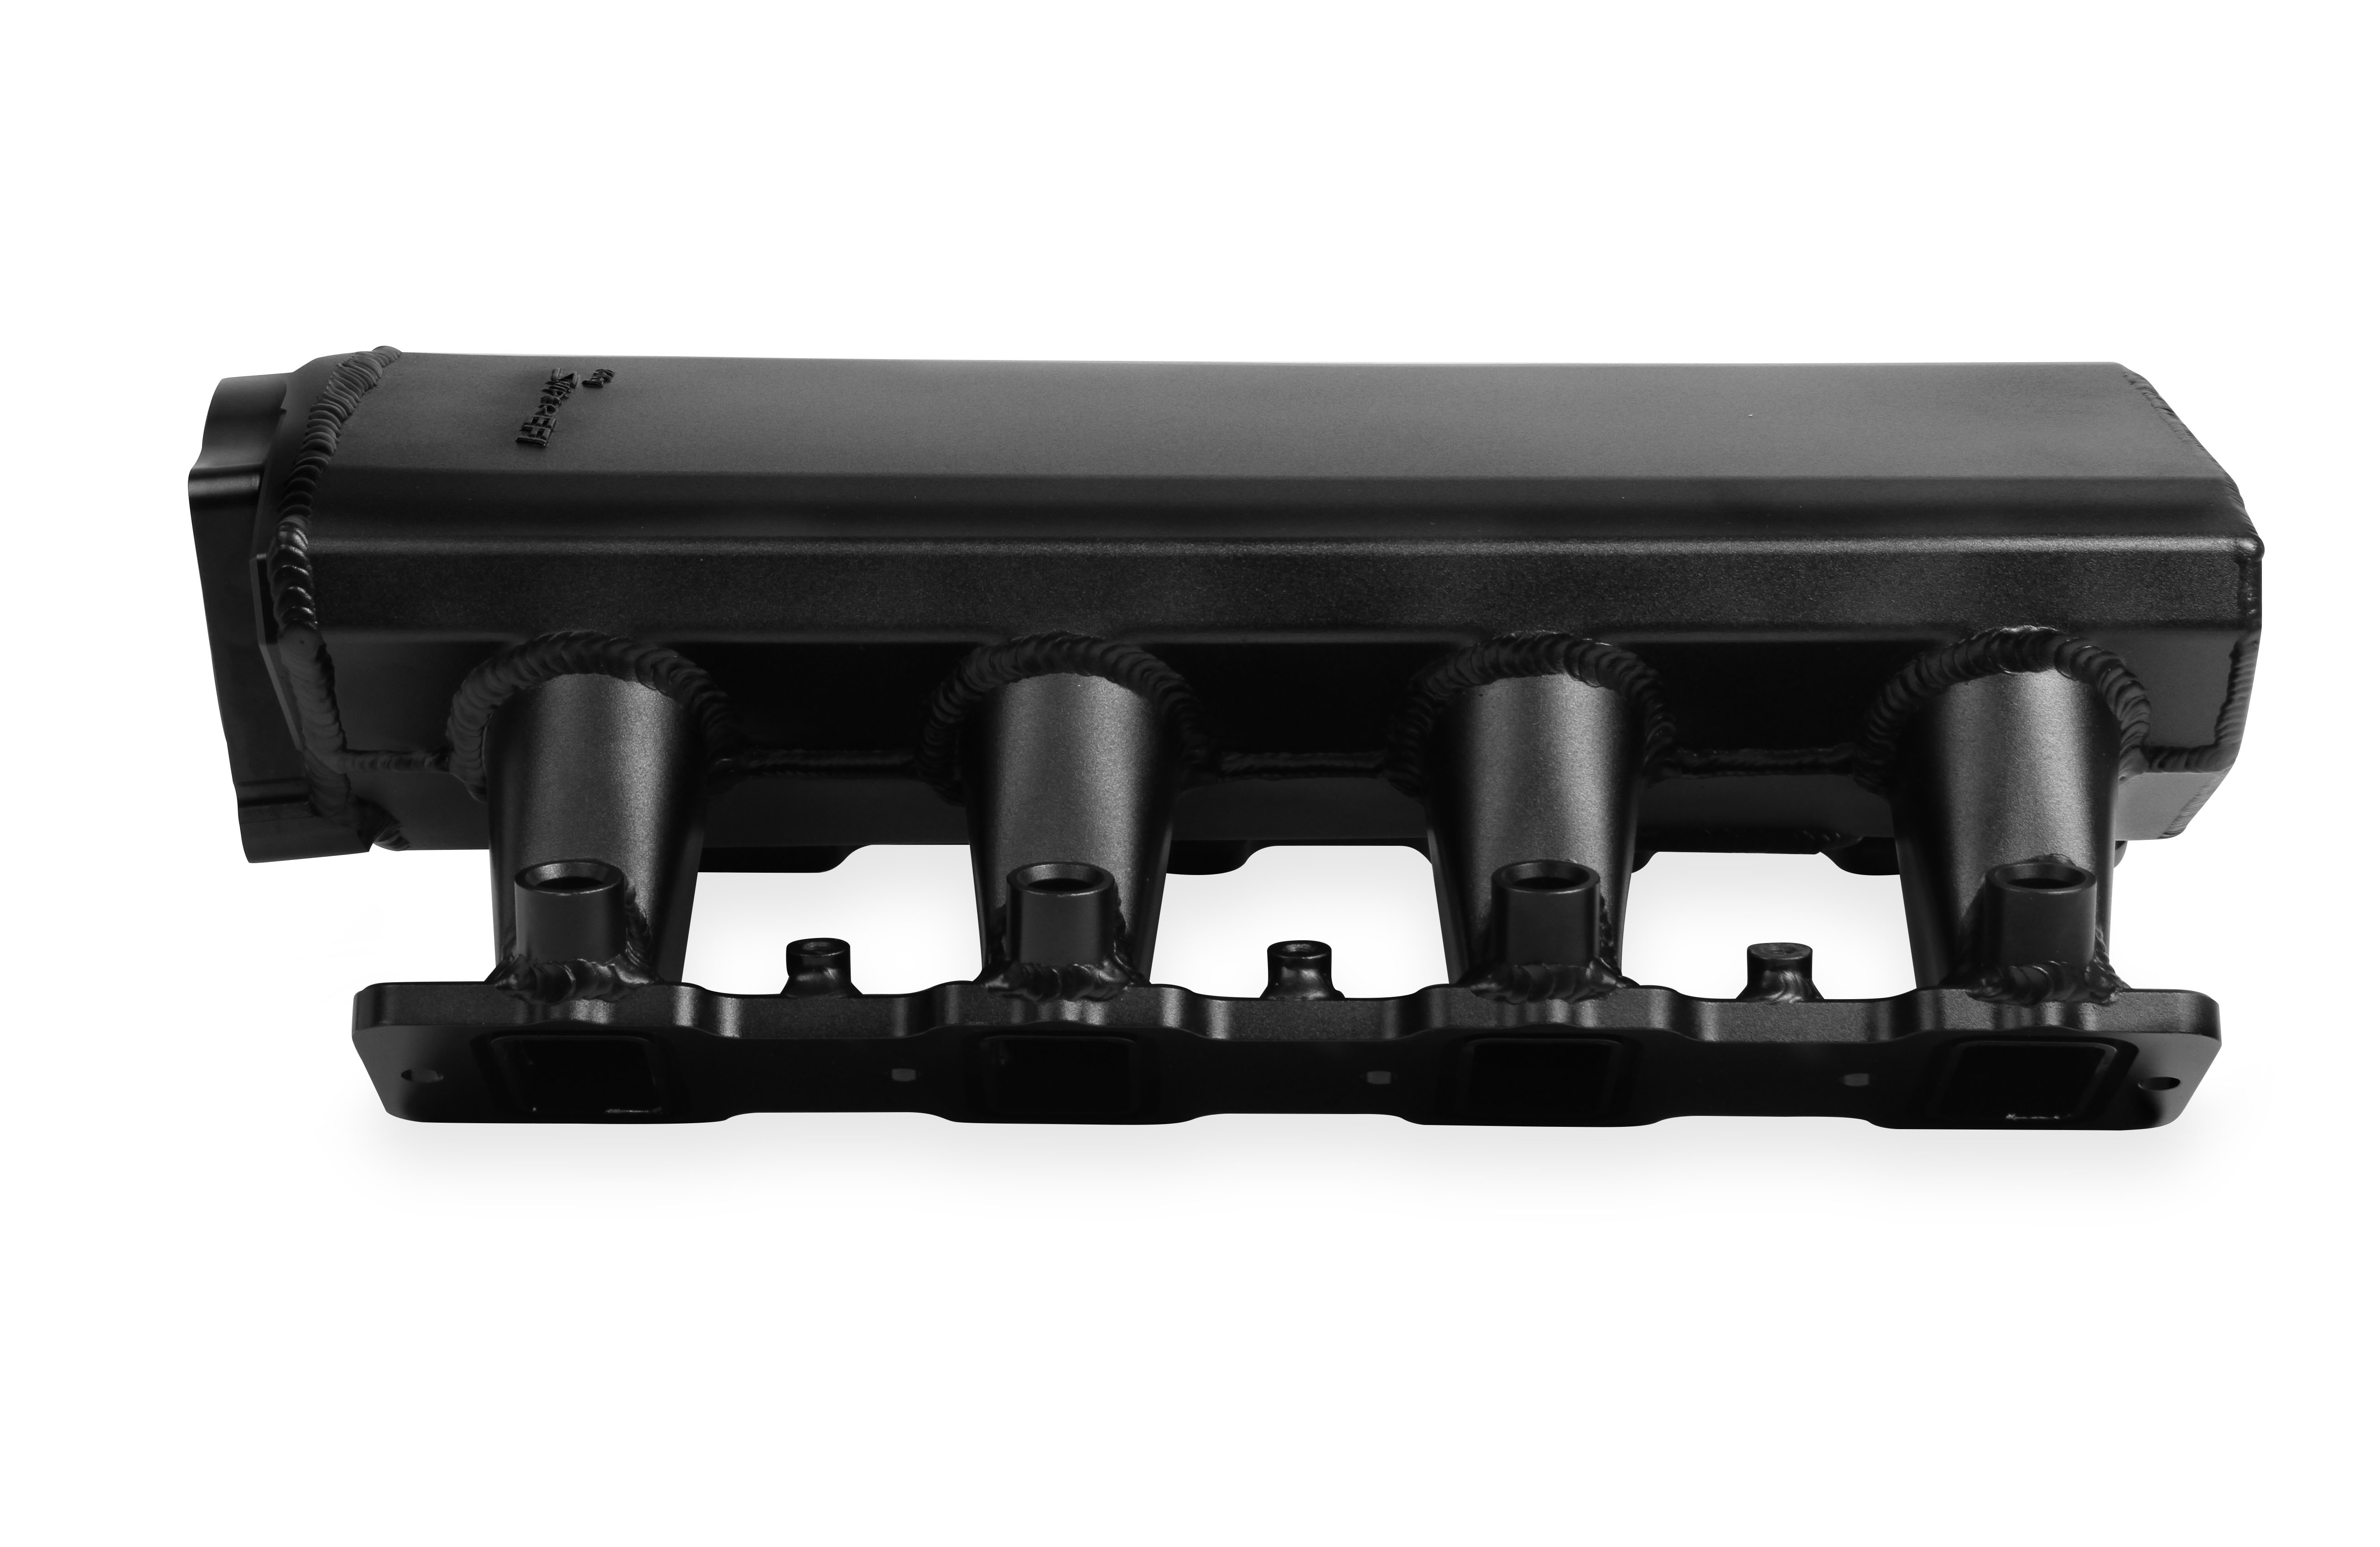 LS7 Holley 92mm Sniper EFI Low-Profile Sheet Metal Fabricated Intake Manifold w/Fuel Rail Kit - Black